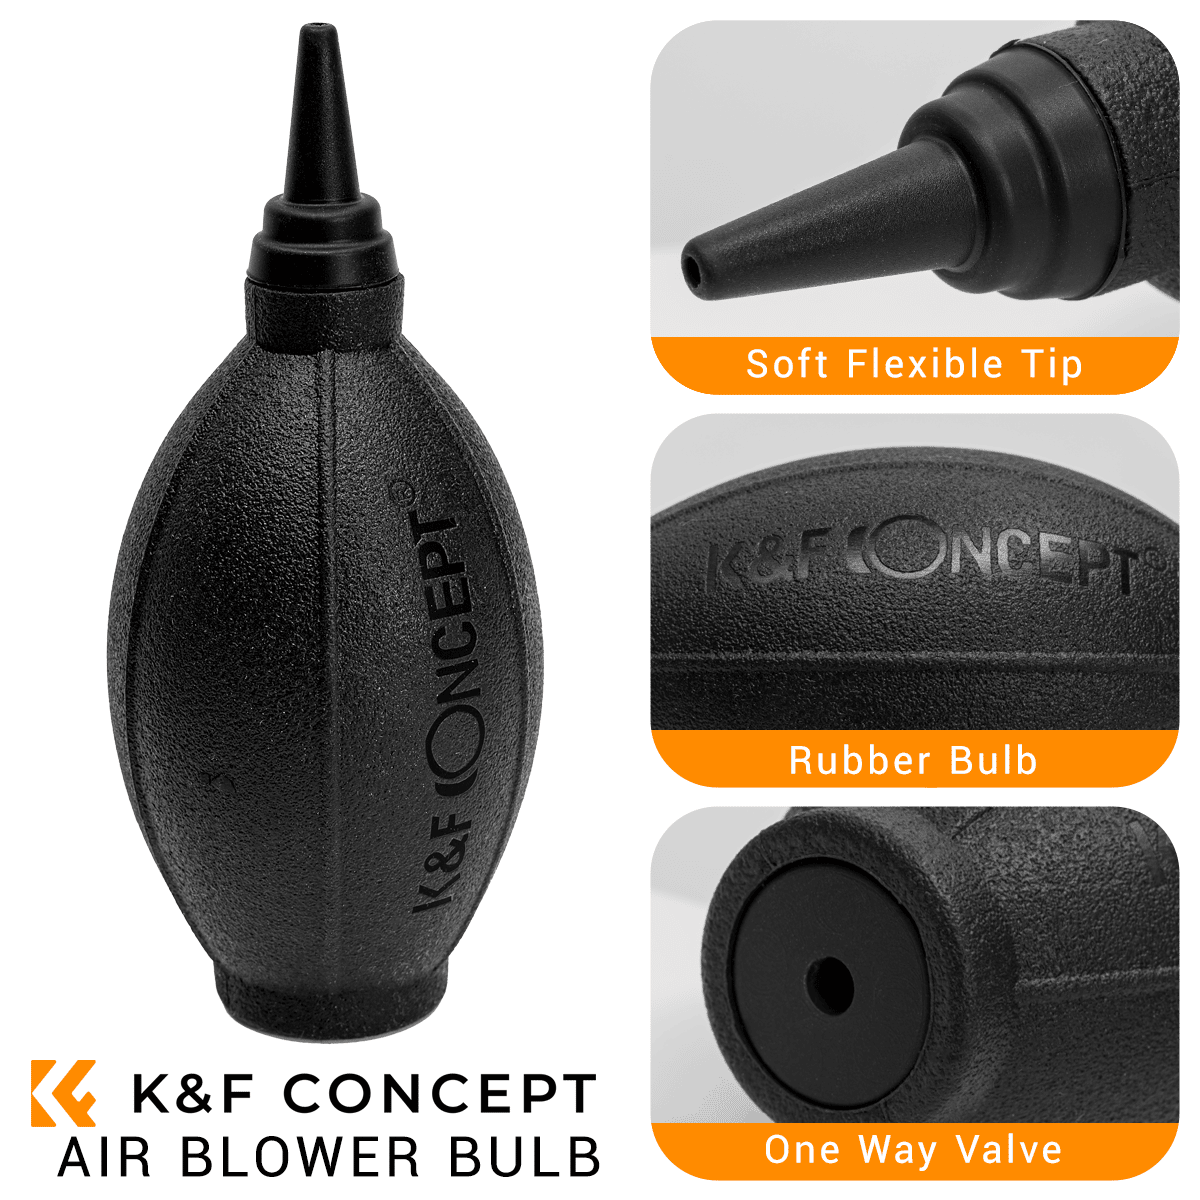 K&F CONCEPT 4 IN 1 CLEANING KIT Camera tek